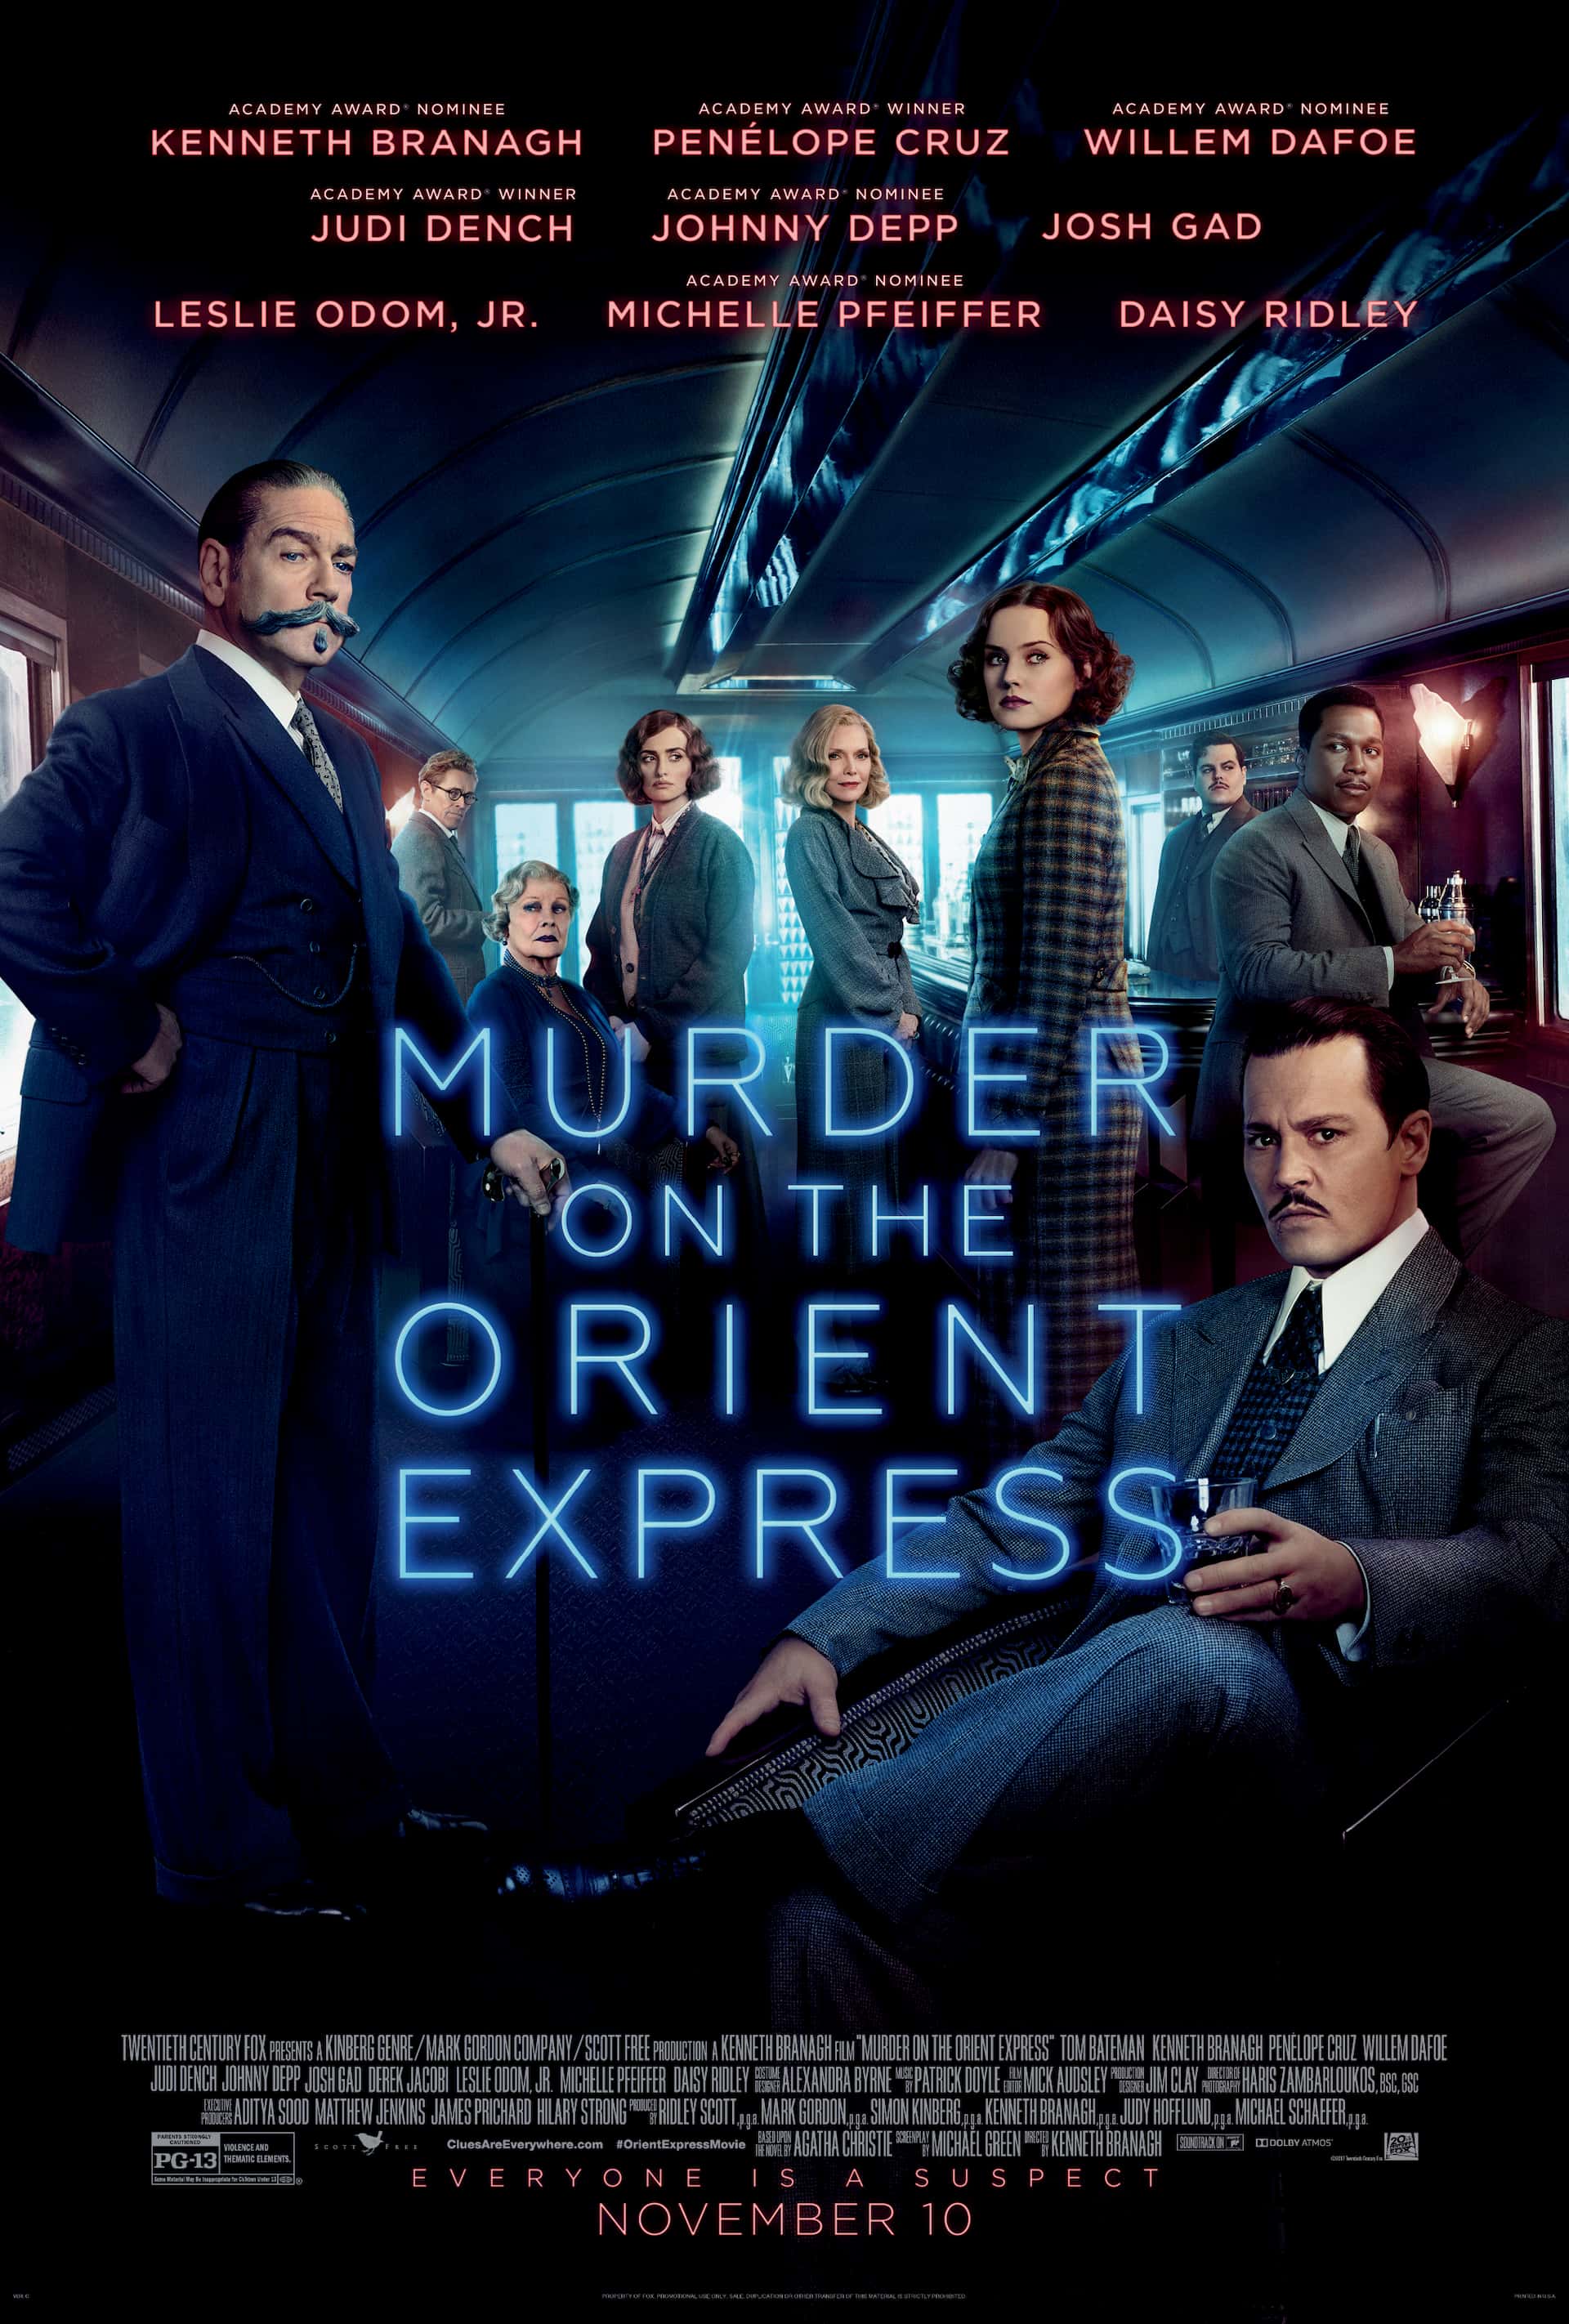 Murder on the Orient Express ฆาตกรรมบนรถด่วนโอเรียนท์เอกซ์เพรส